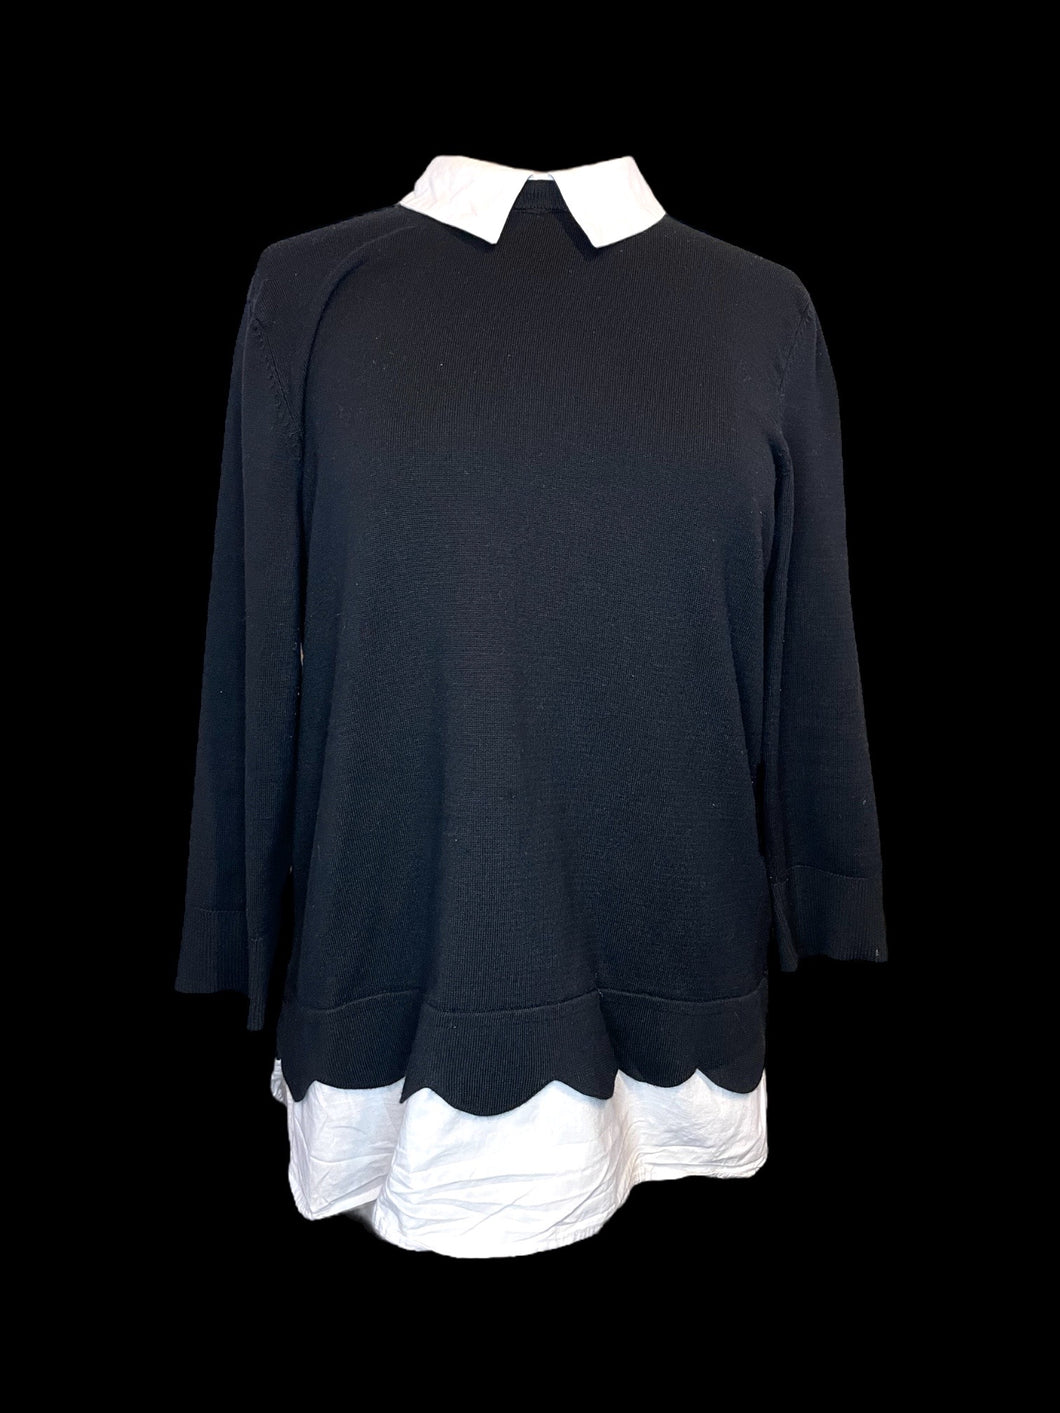 1X Black & white 3/4 sleeve faux collared undershirt sweater w/ scalloped hem, & two clasp keyhole closure